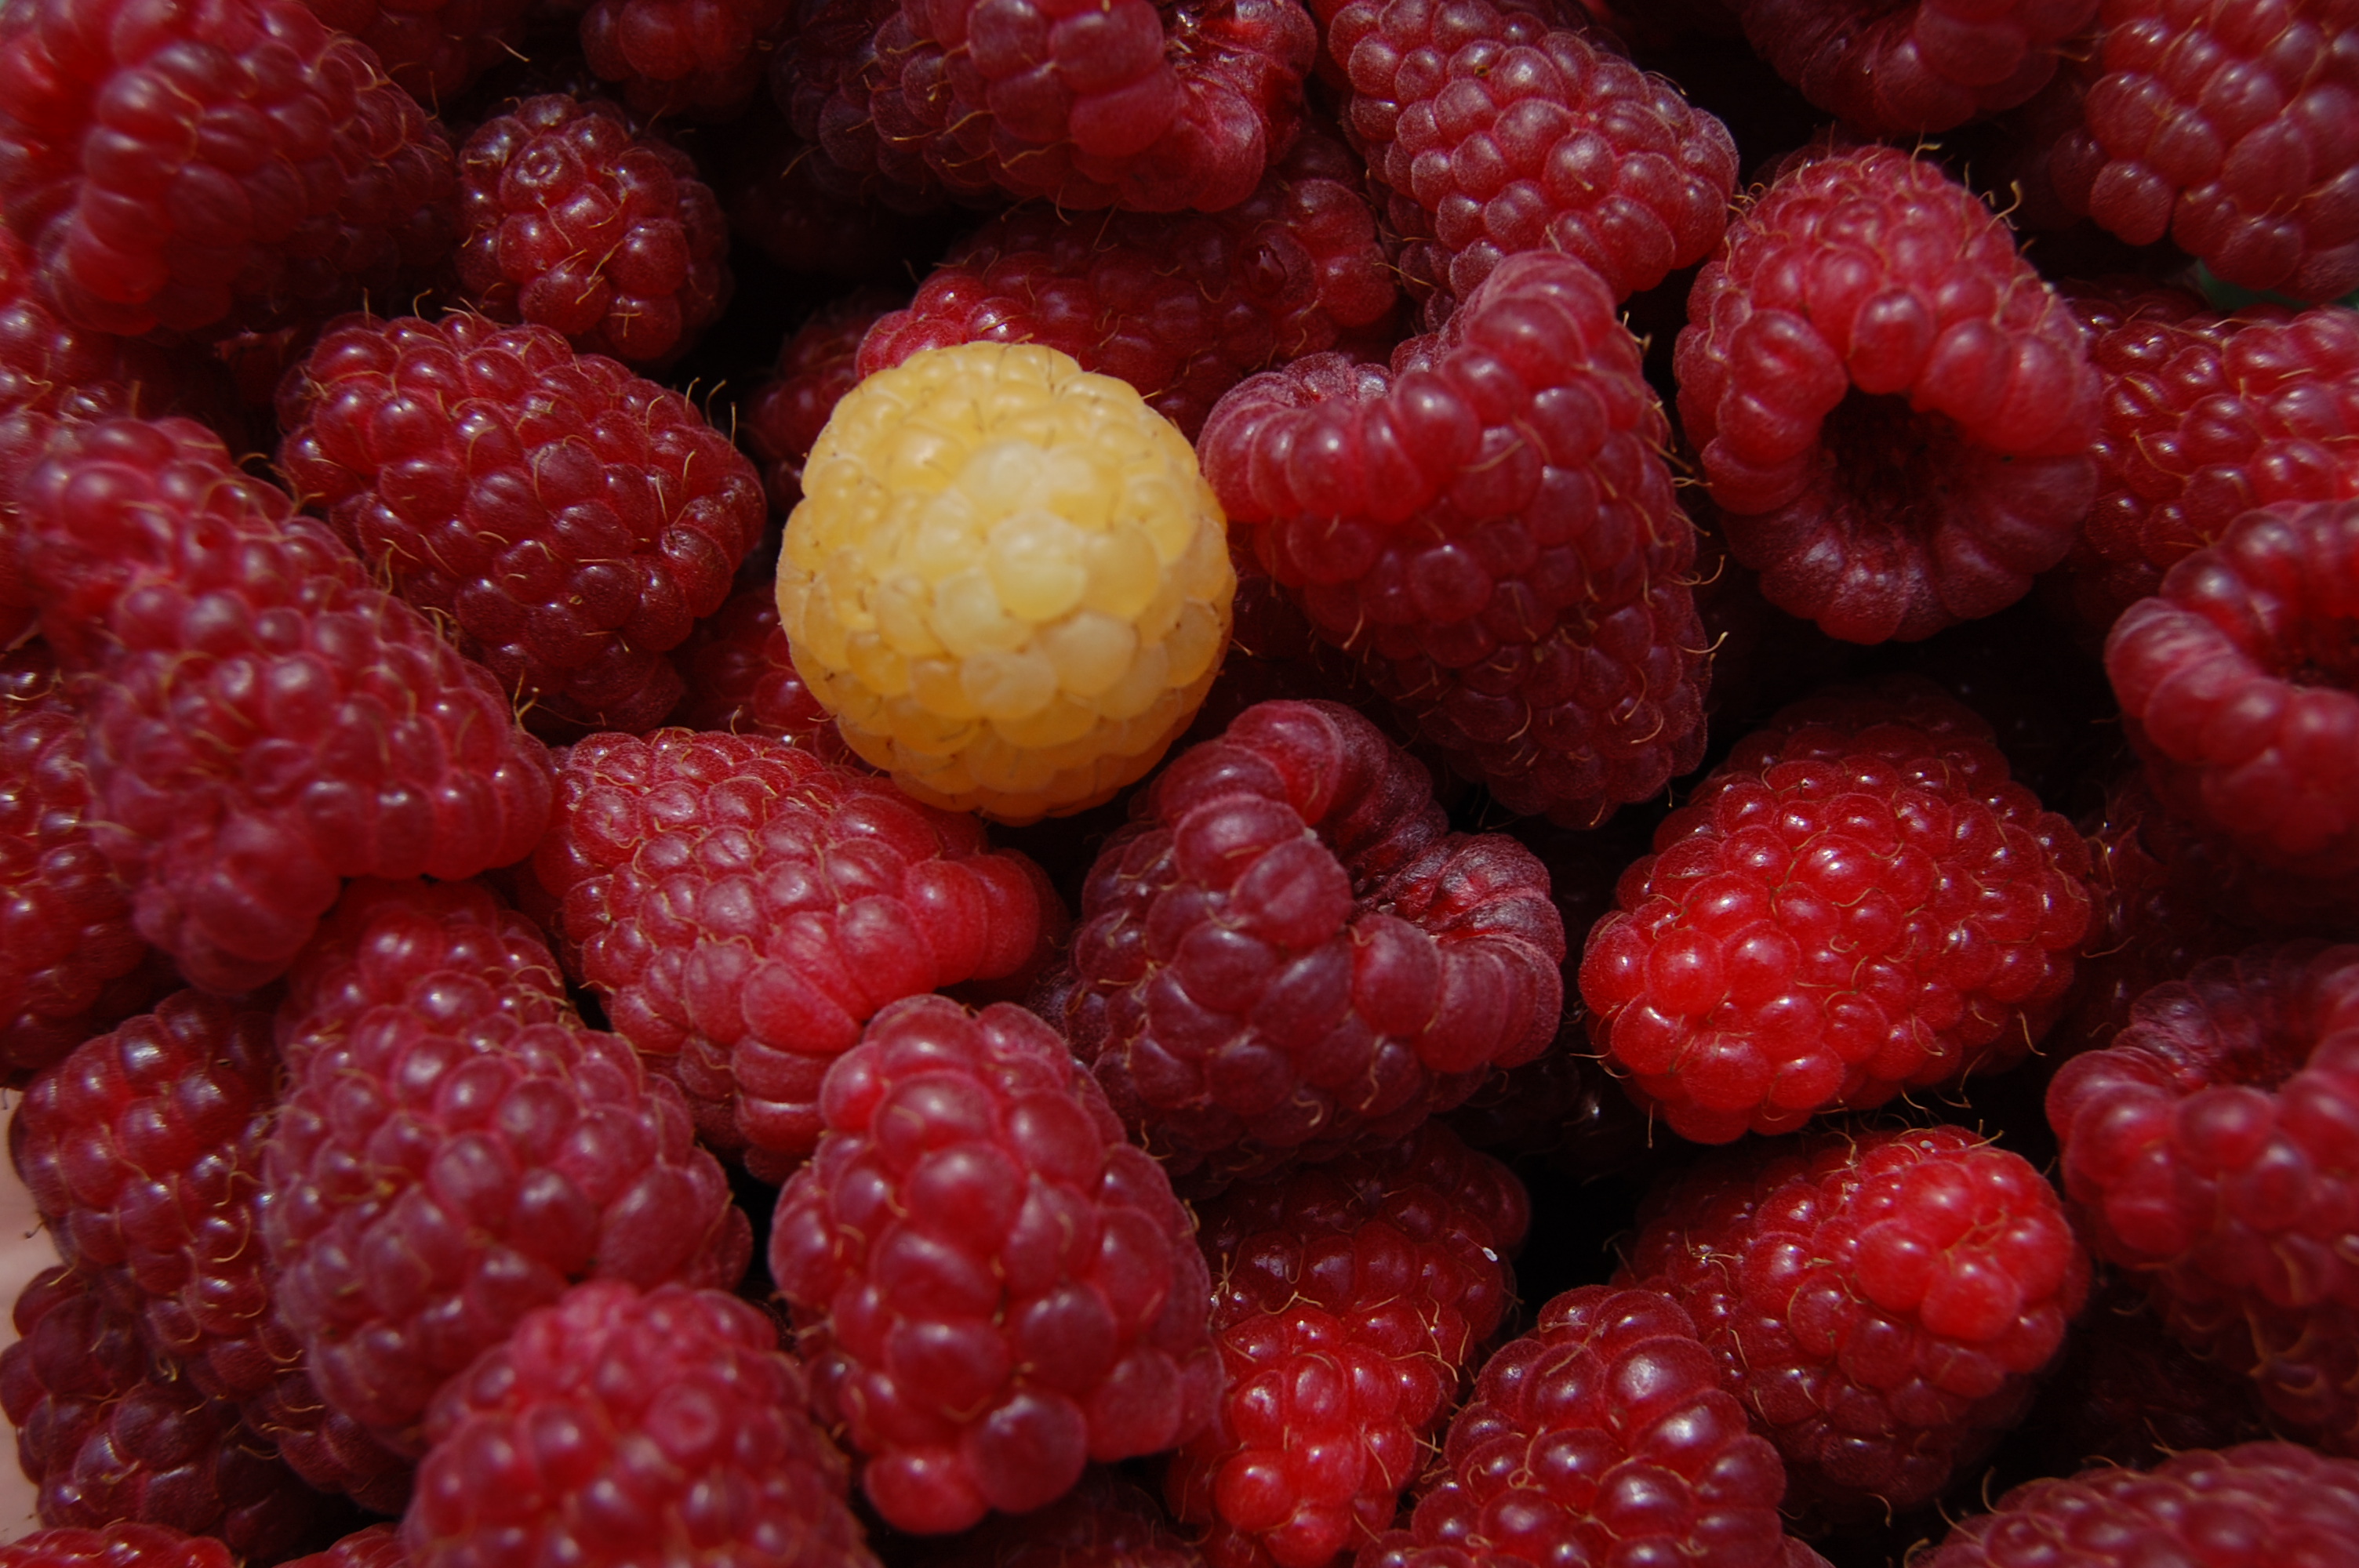 Red raspberries 1 yellow: taken by Lyudmilla Mishonova